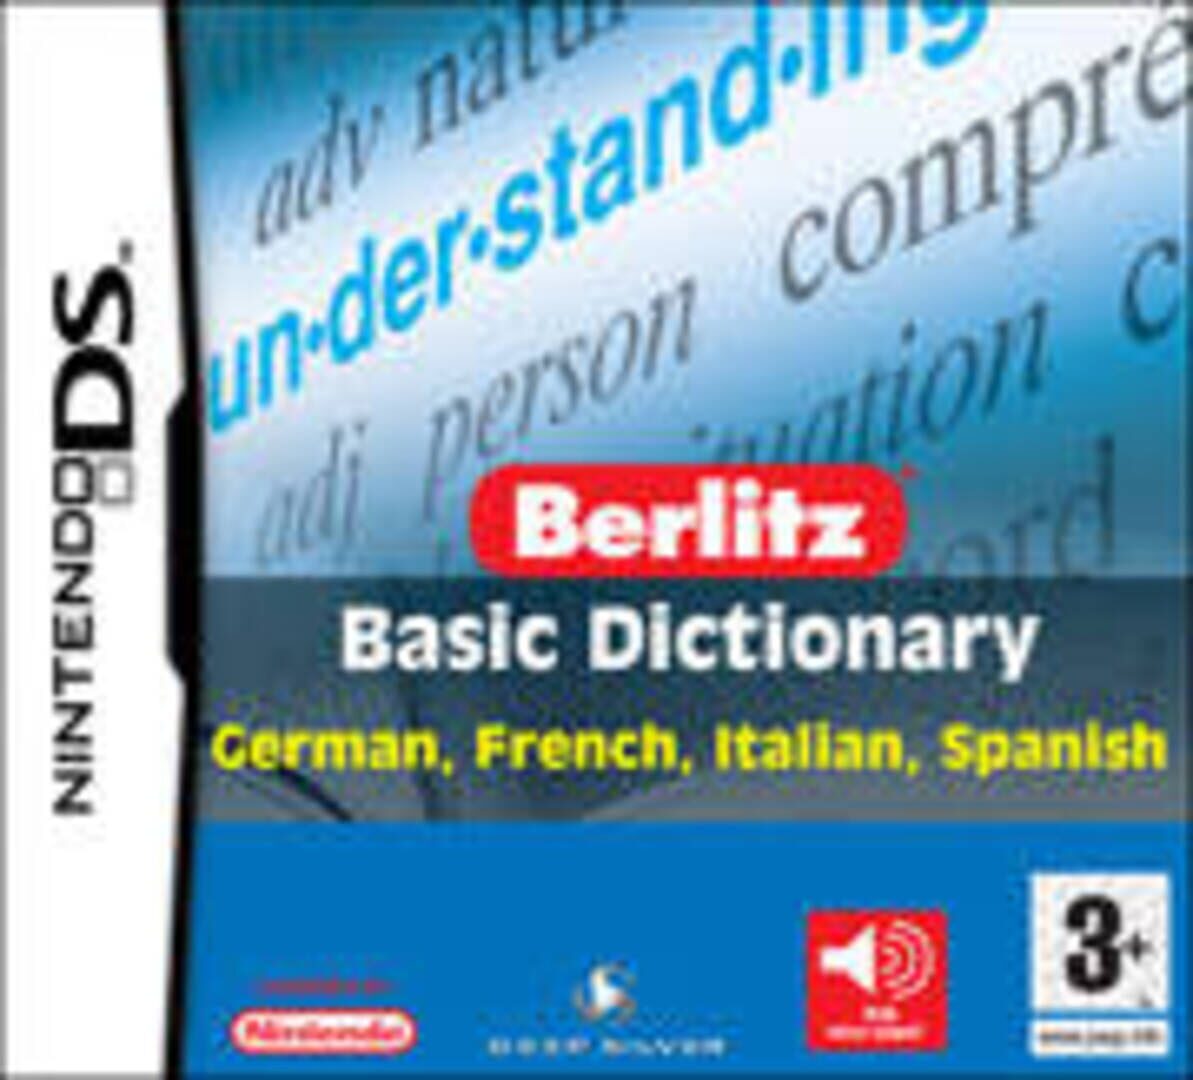 Berlitz English Dictionary